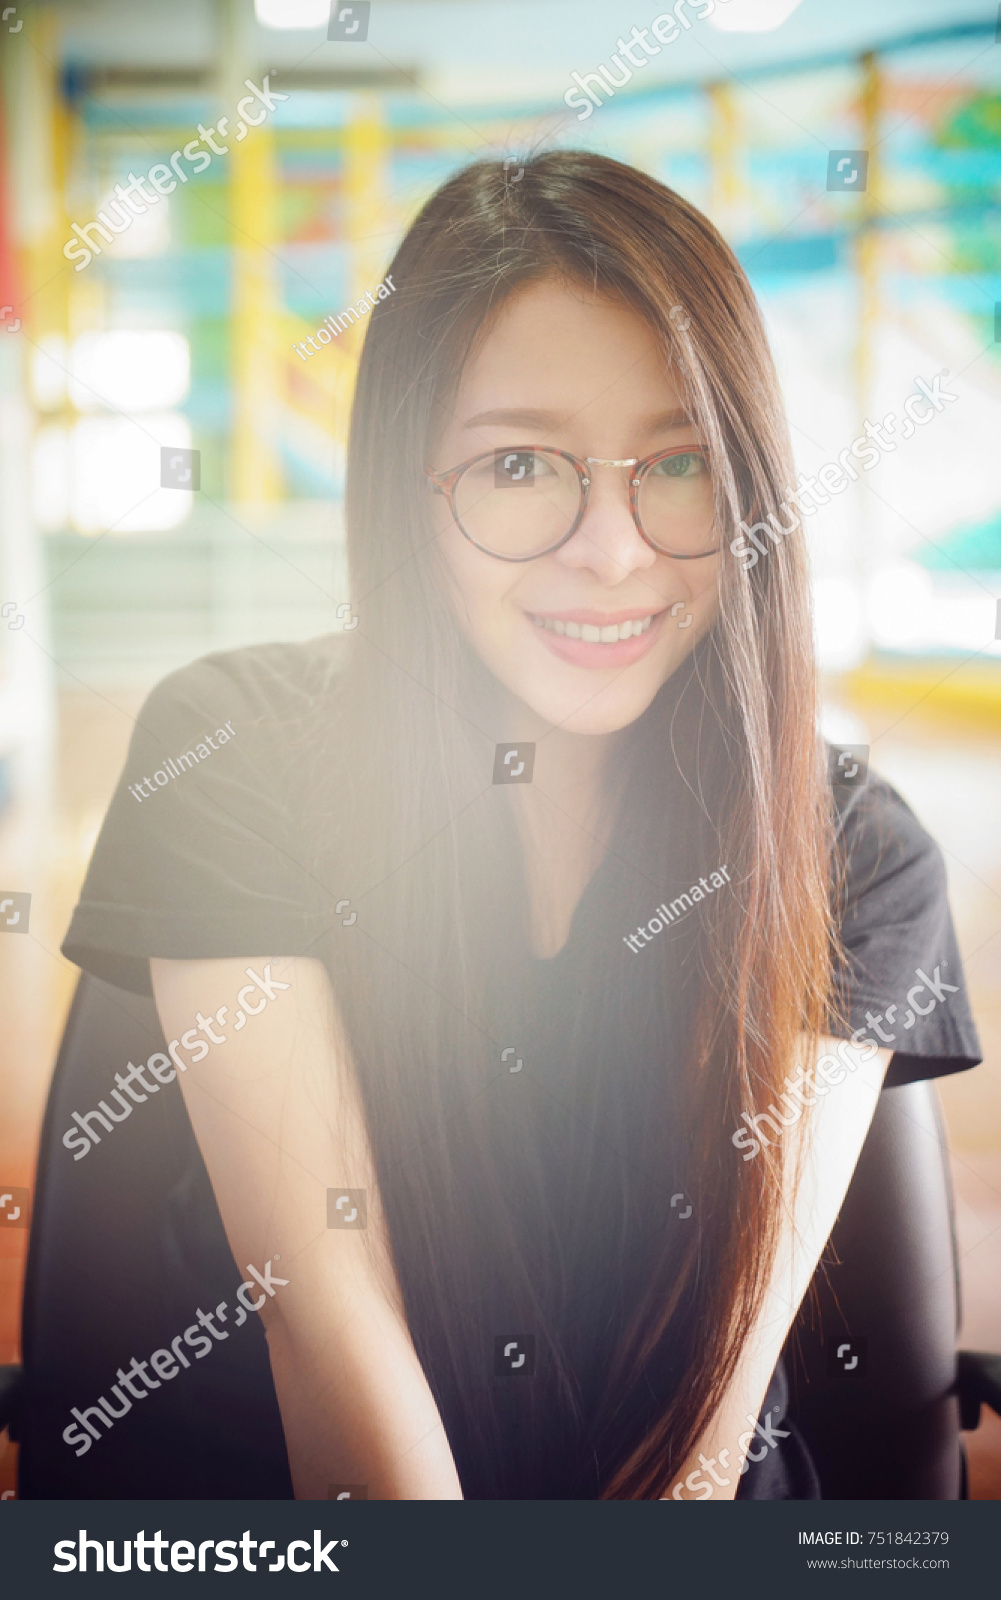 andrew hayhurst add cute asian girl glasses photo